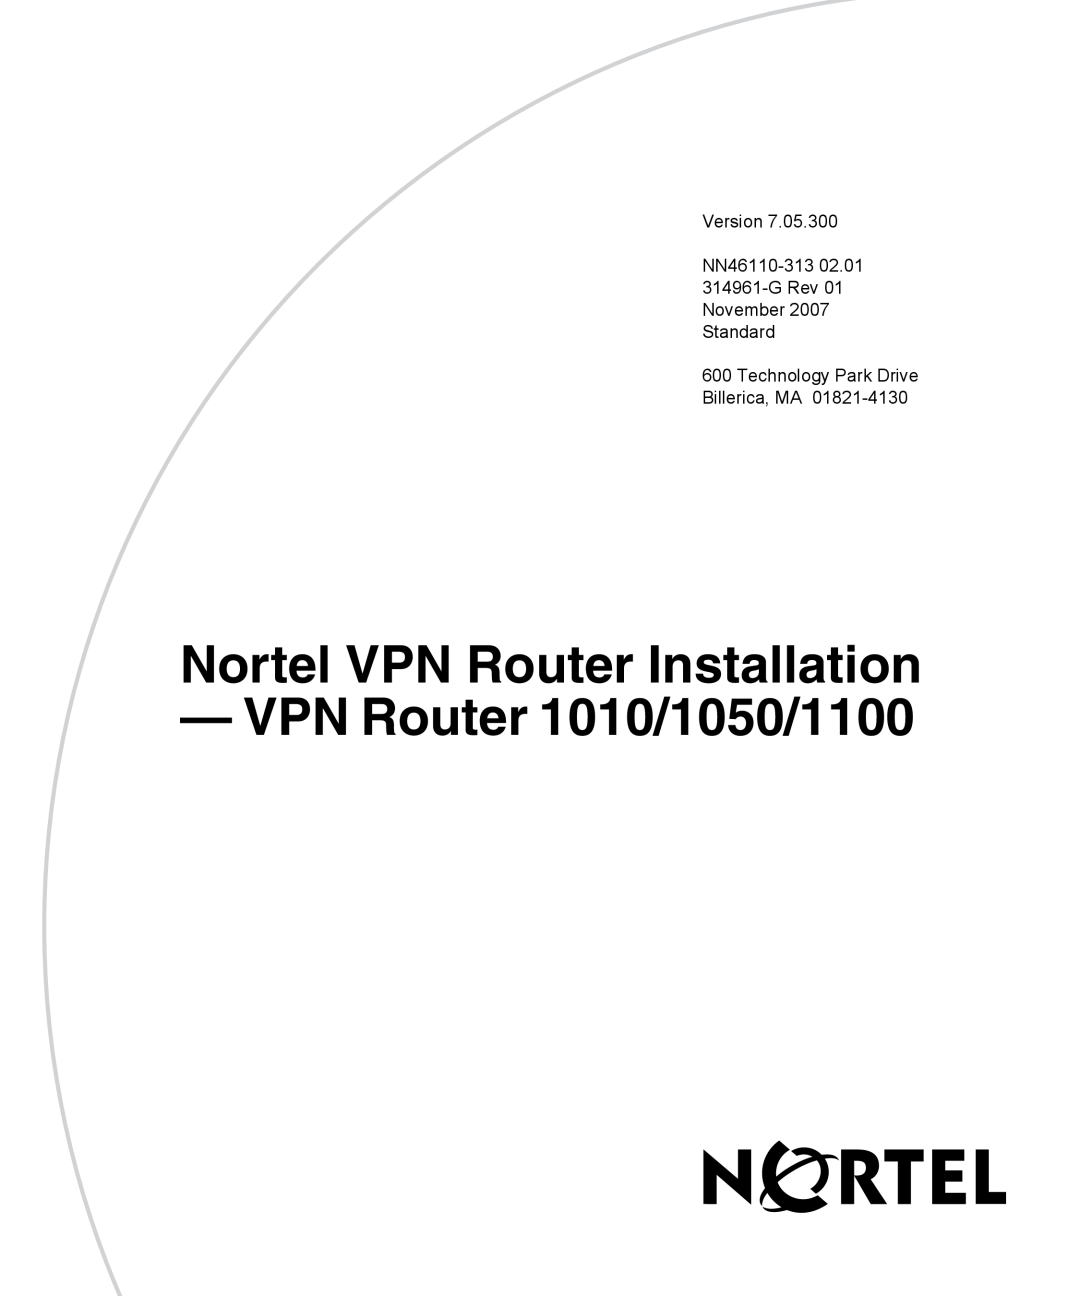 Nortel Networks manual Nortel VPN Router Installation VPN Router 1010/1050/1100, Technology Park Drive Billerica, MA 